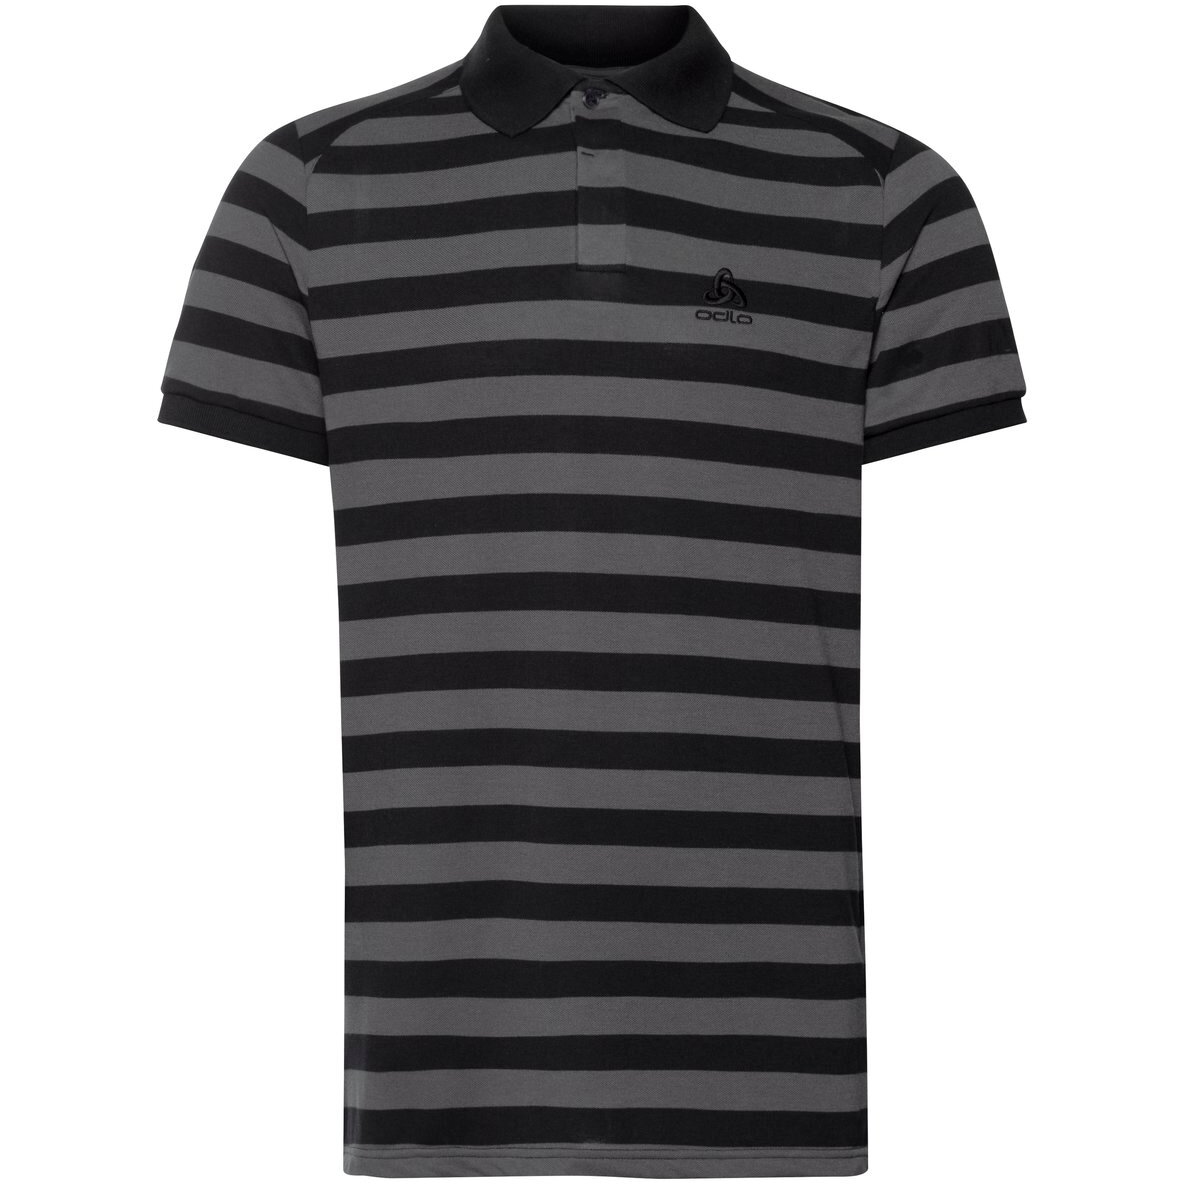 Picture of Odlo Concord Polo T-Shirt Men - black - new odlo graphite grey